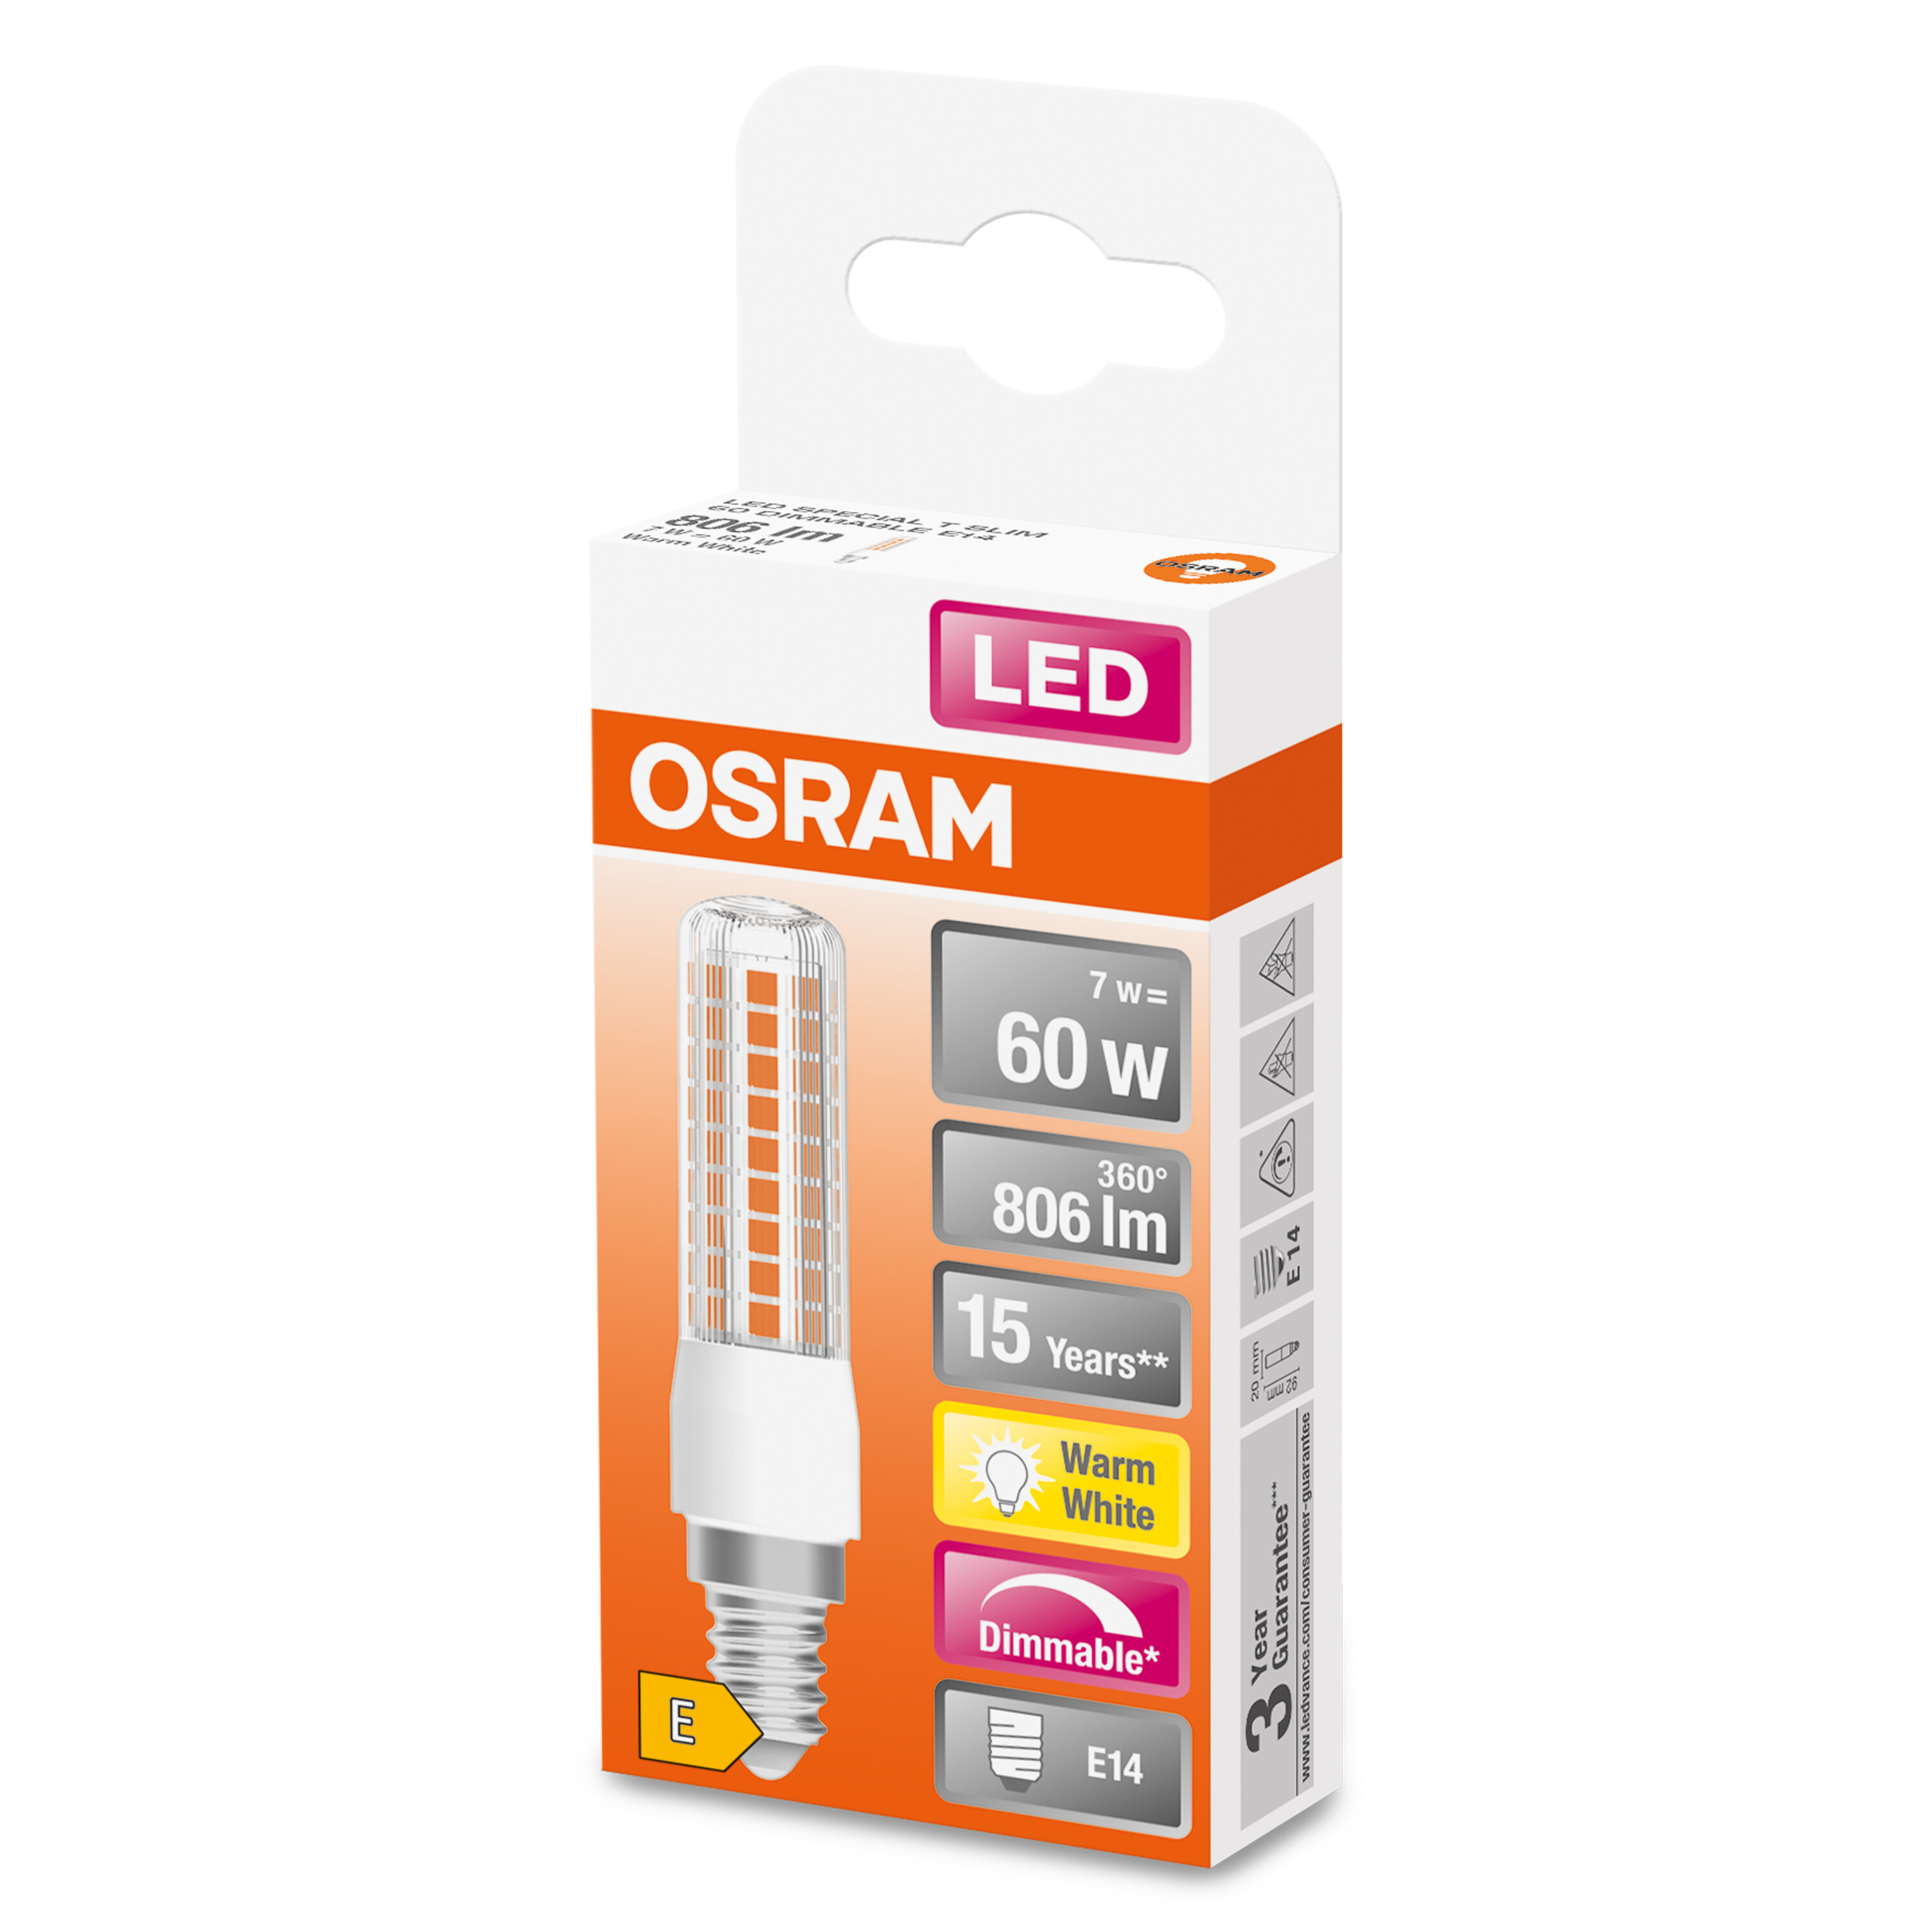 OSRAM  LED DIM SPECIAL lumen T Warmweiß Lampe LED 806 SLIM